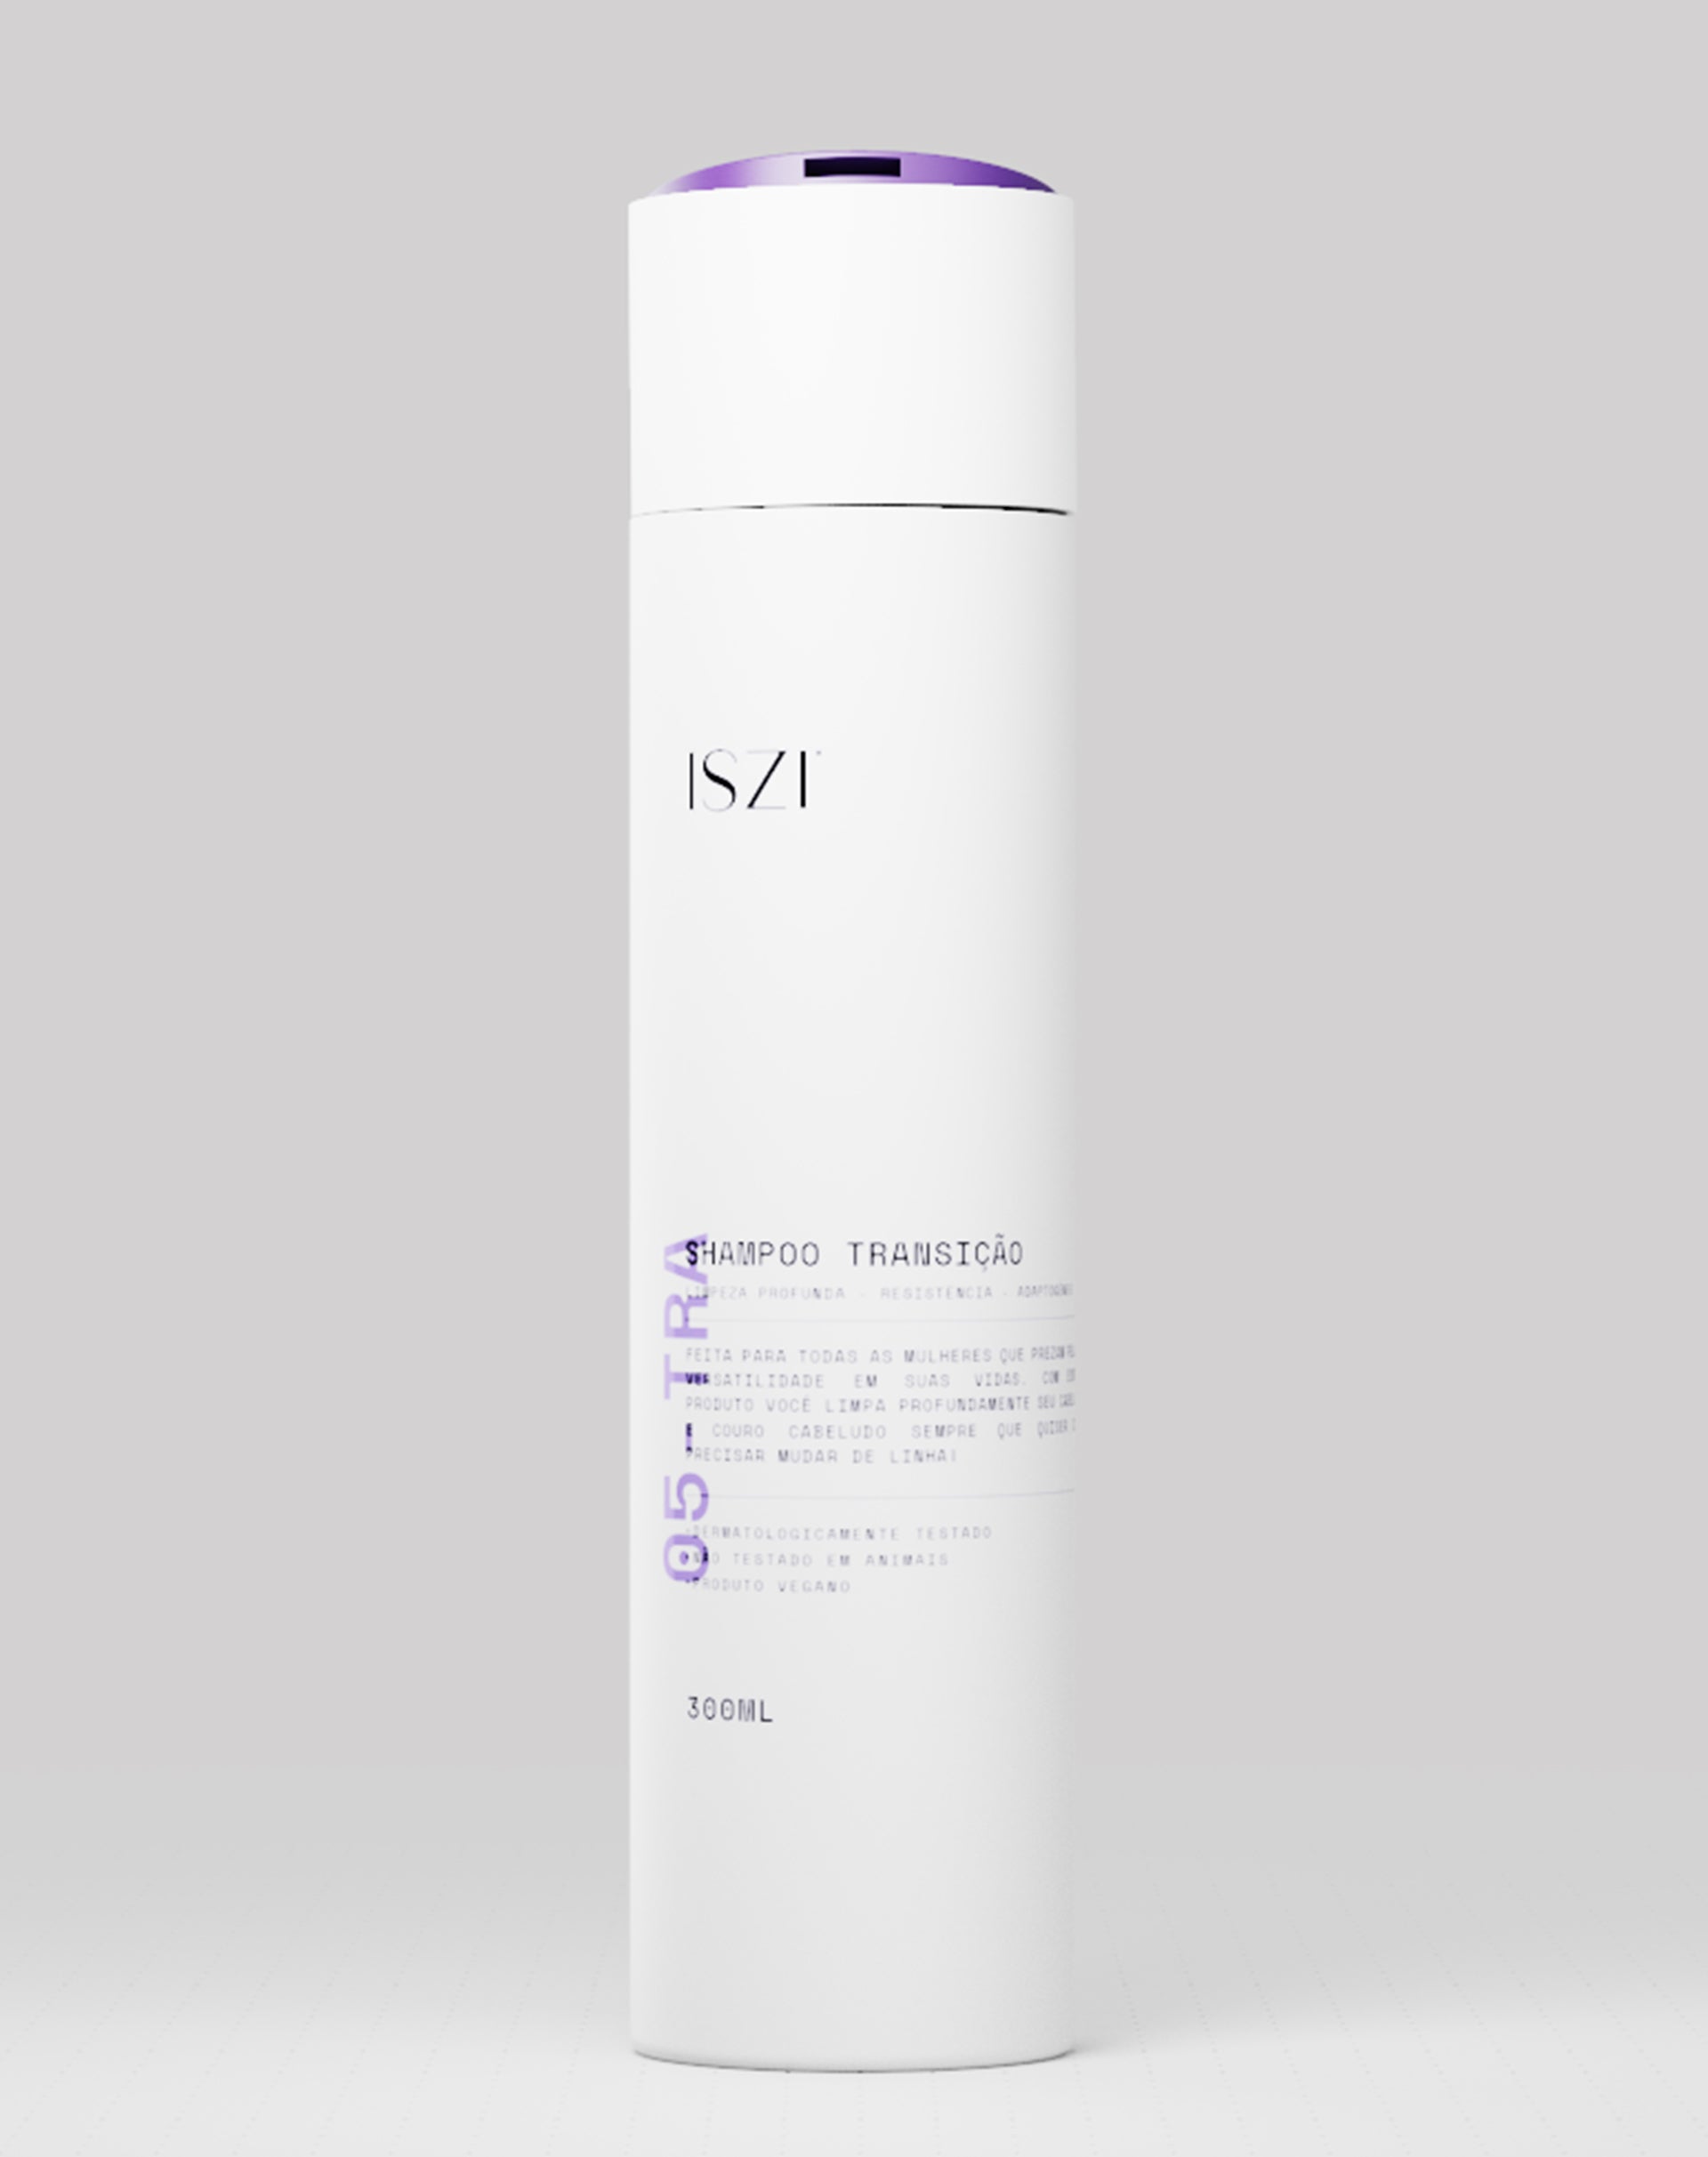 ISZI Shampoo Transição - 300ML - NEUTRA